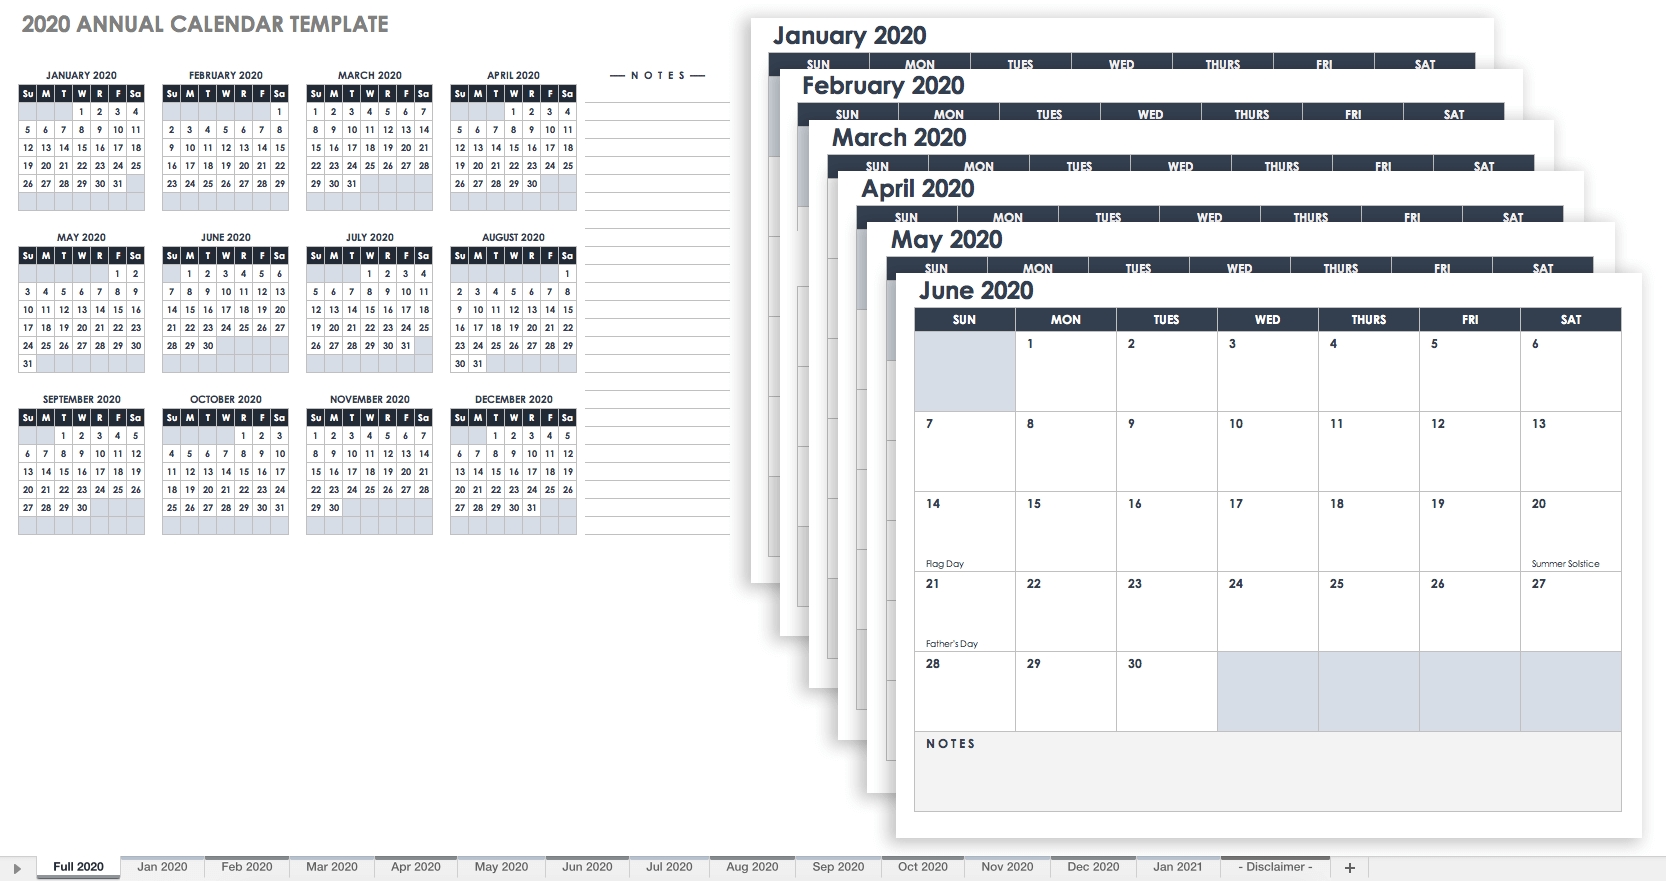 Free Blank Calendar Templates - Smartsheet-2020 Biweekly Payroll Calendar Template